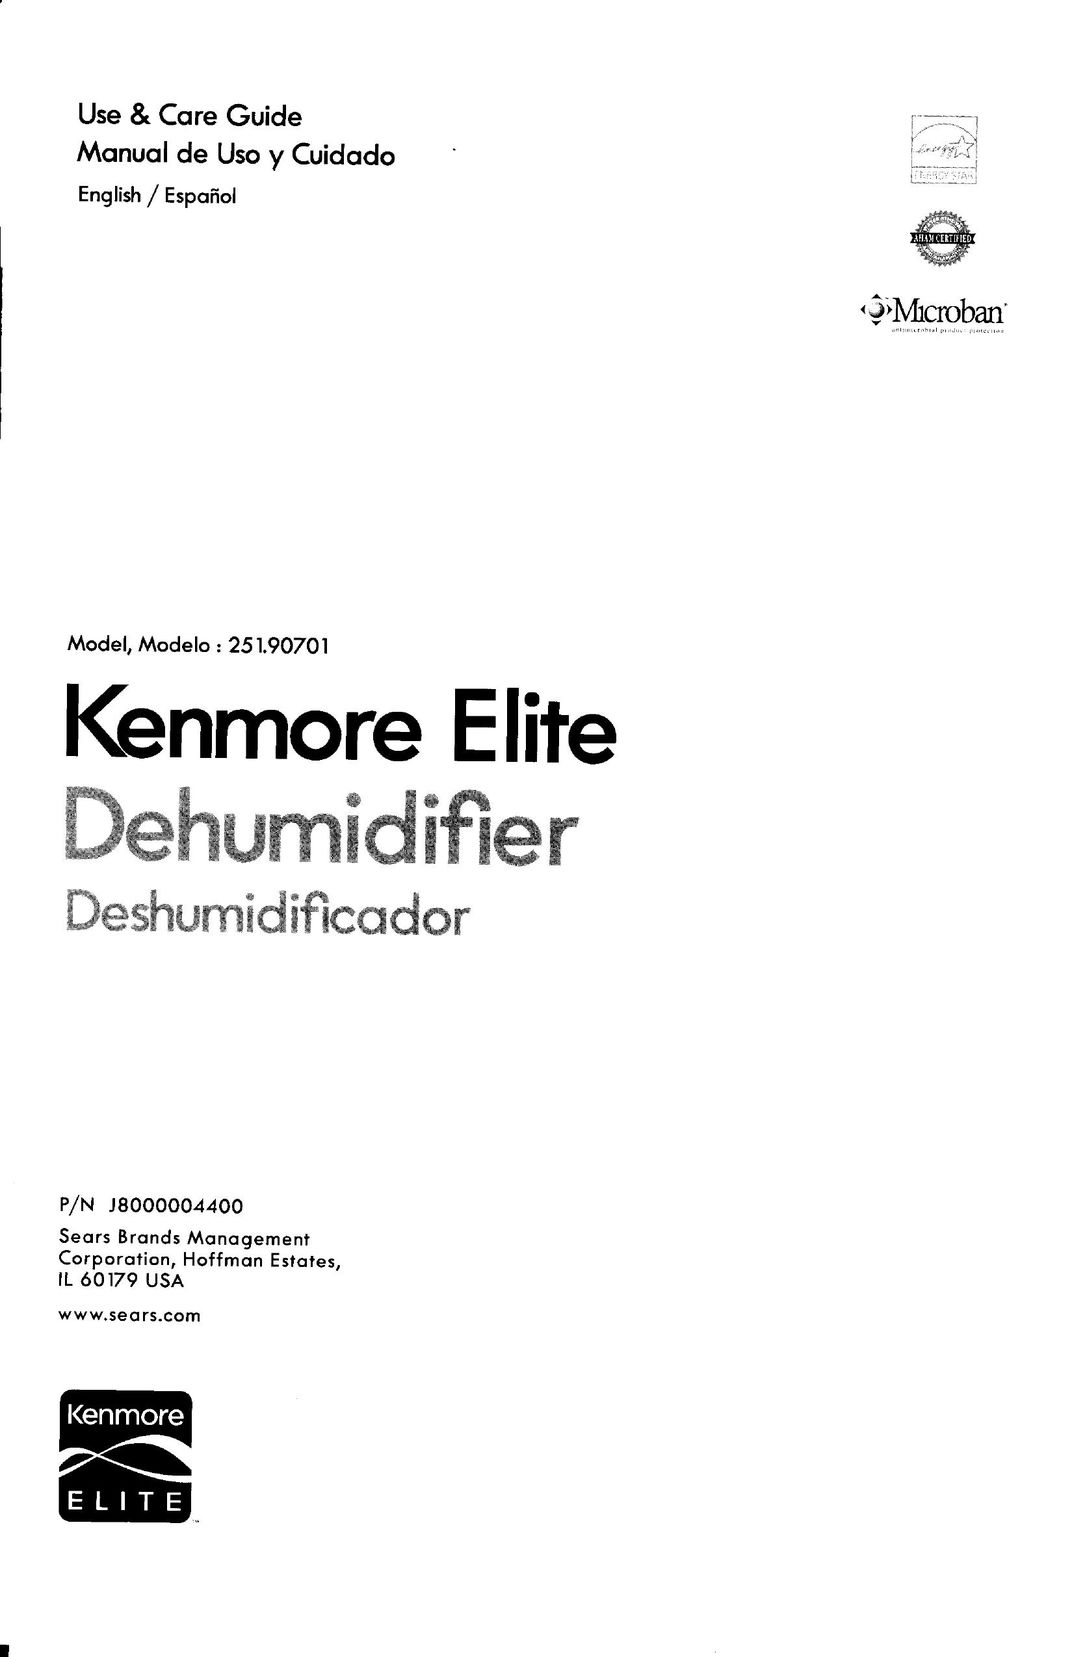 Kenmore 251.907Q1 Dehumidifier User Manual